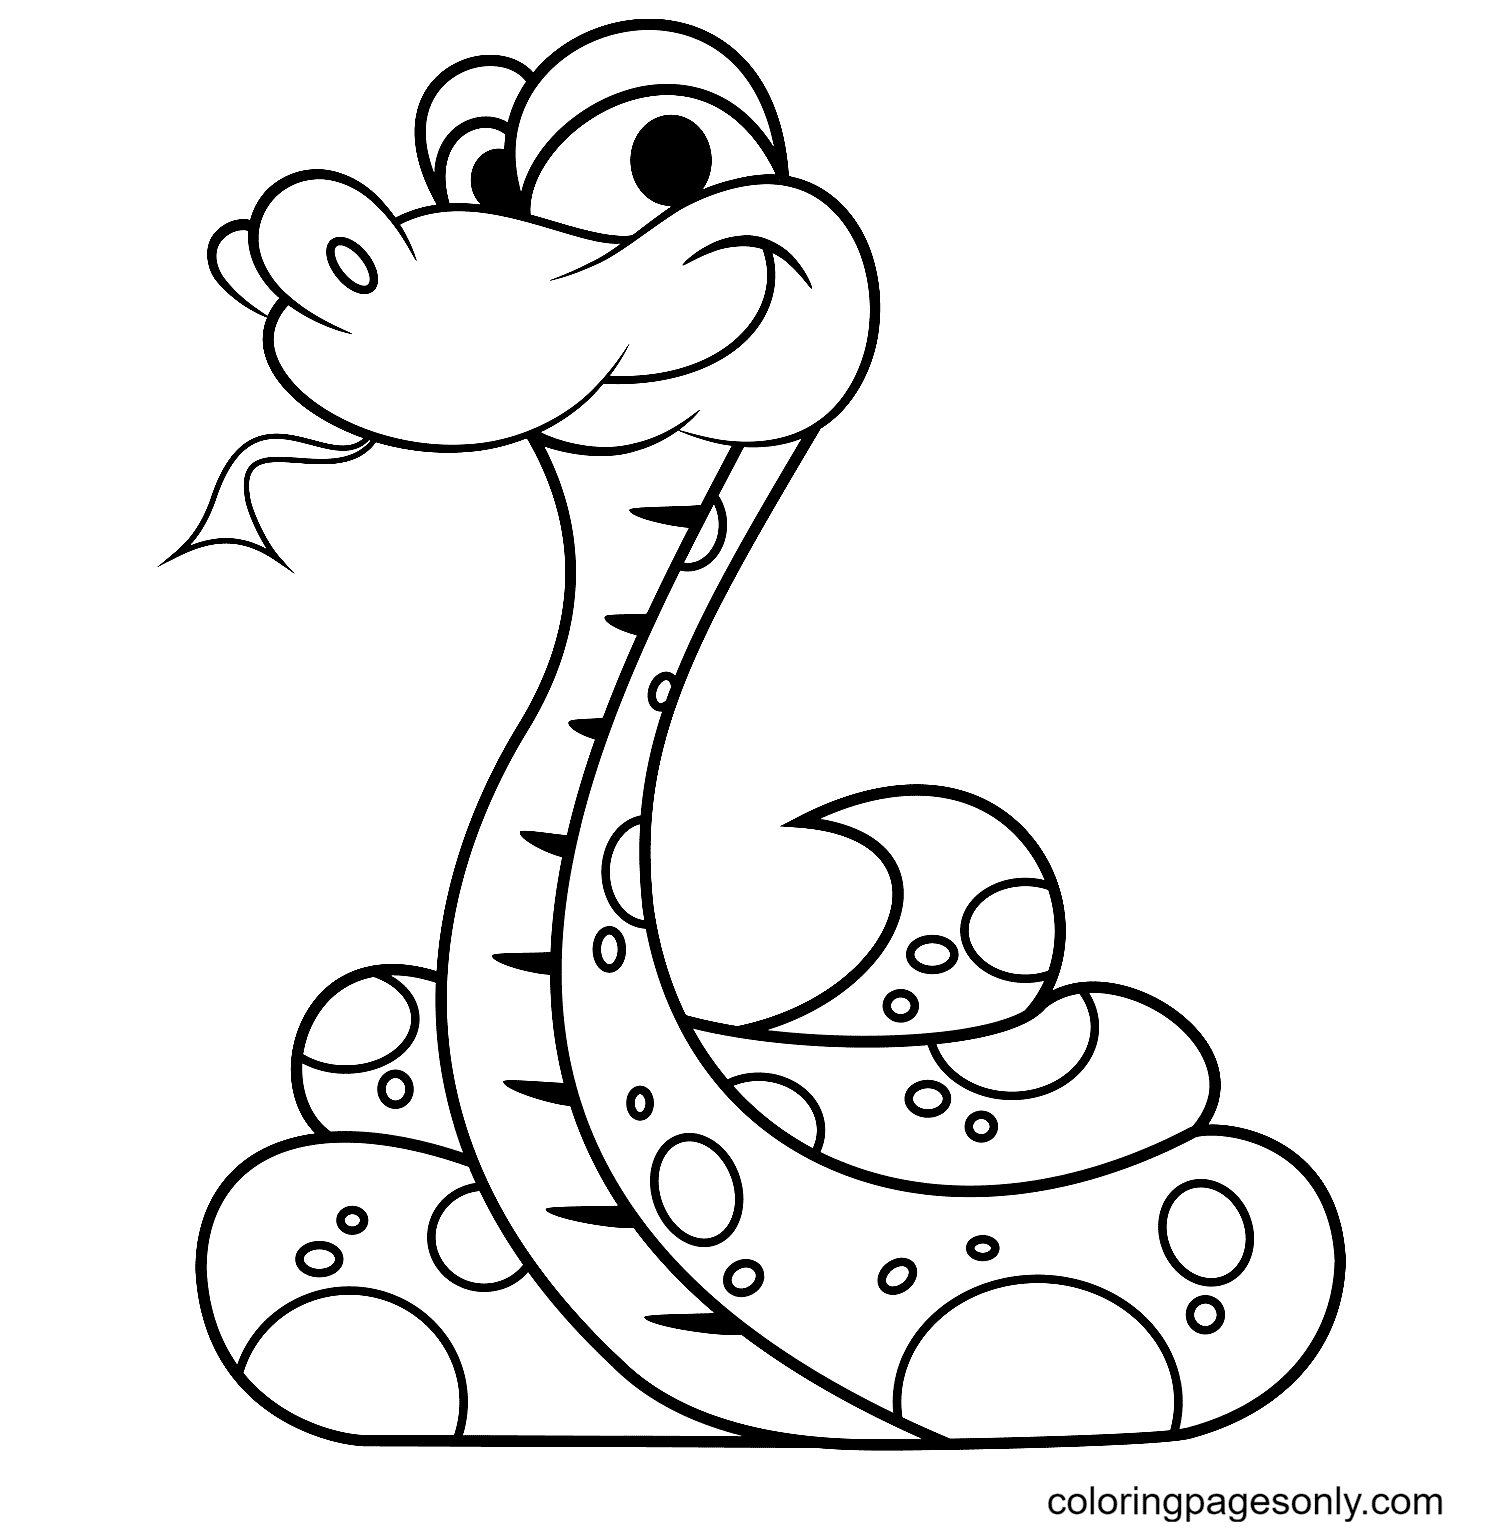 Serpent souriant de Snake